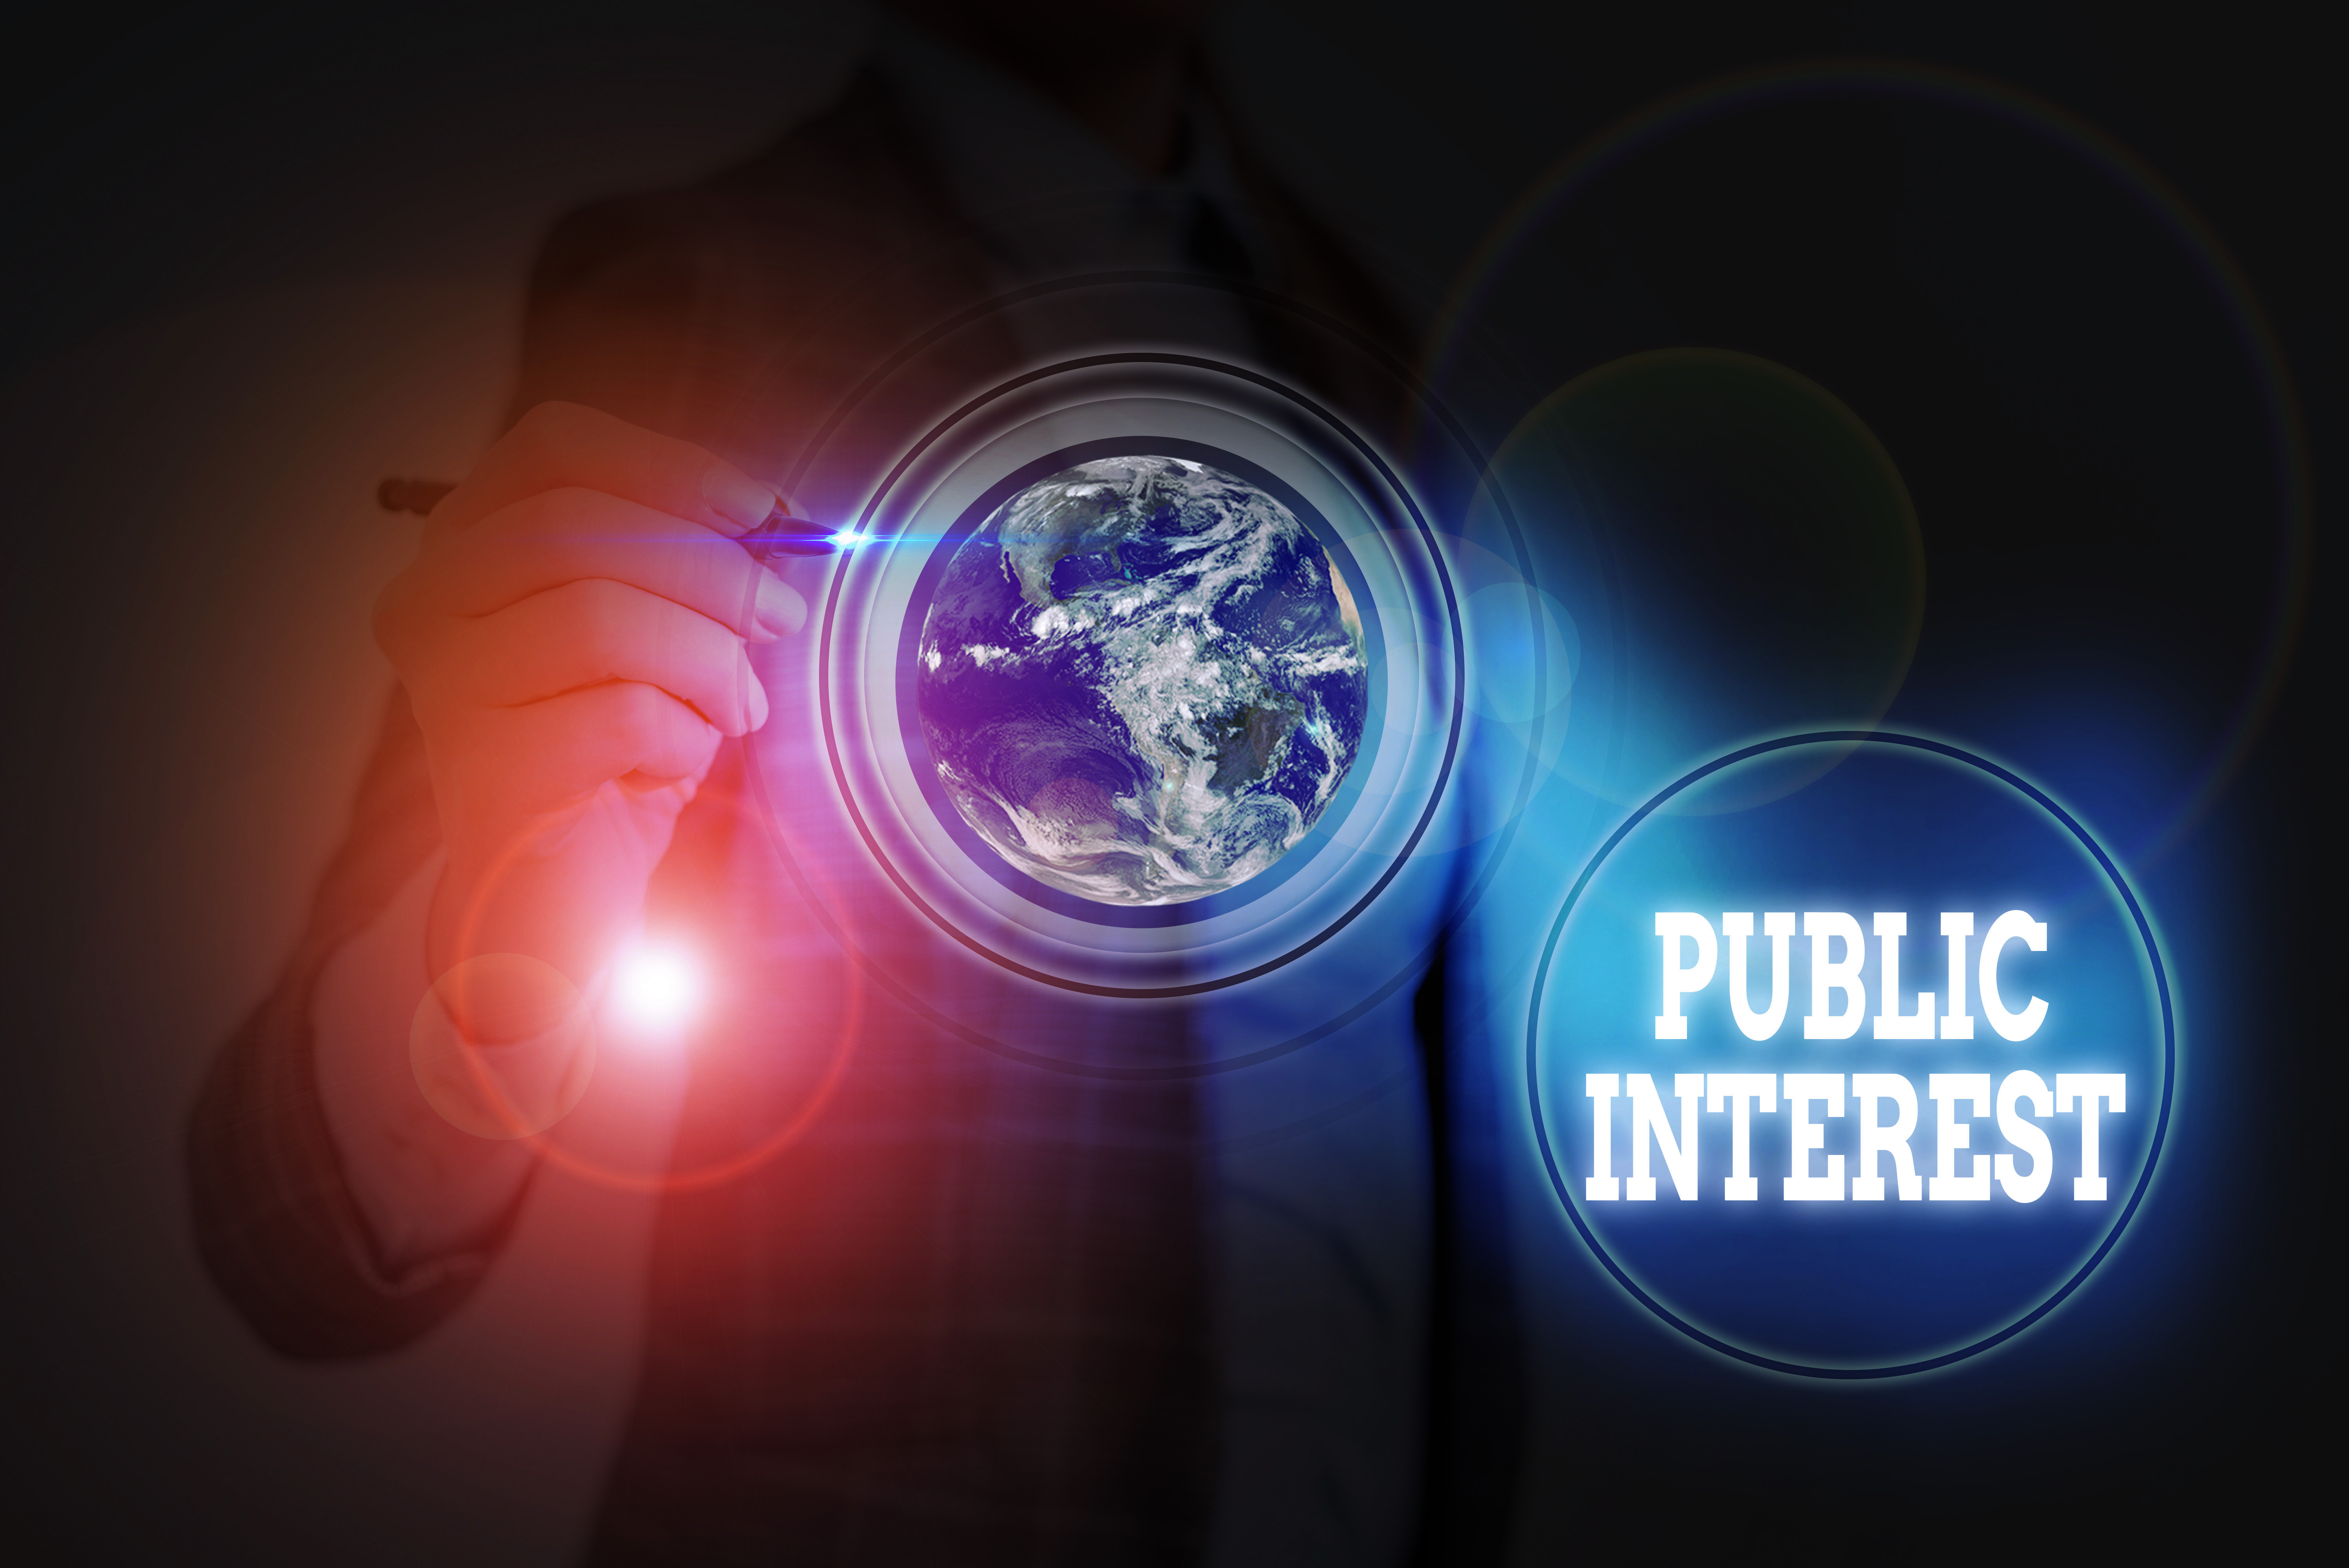 Incidents of Public Interest